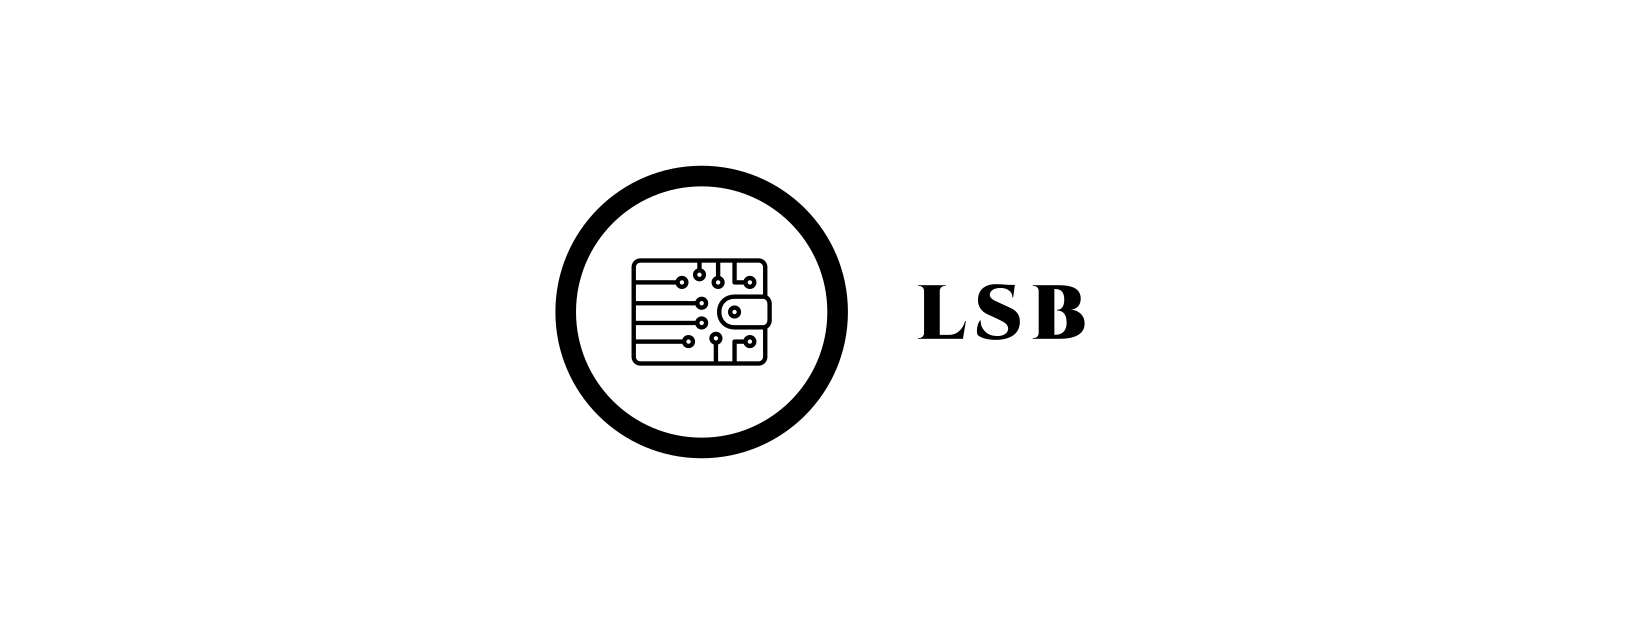 lsb formation